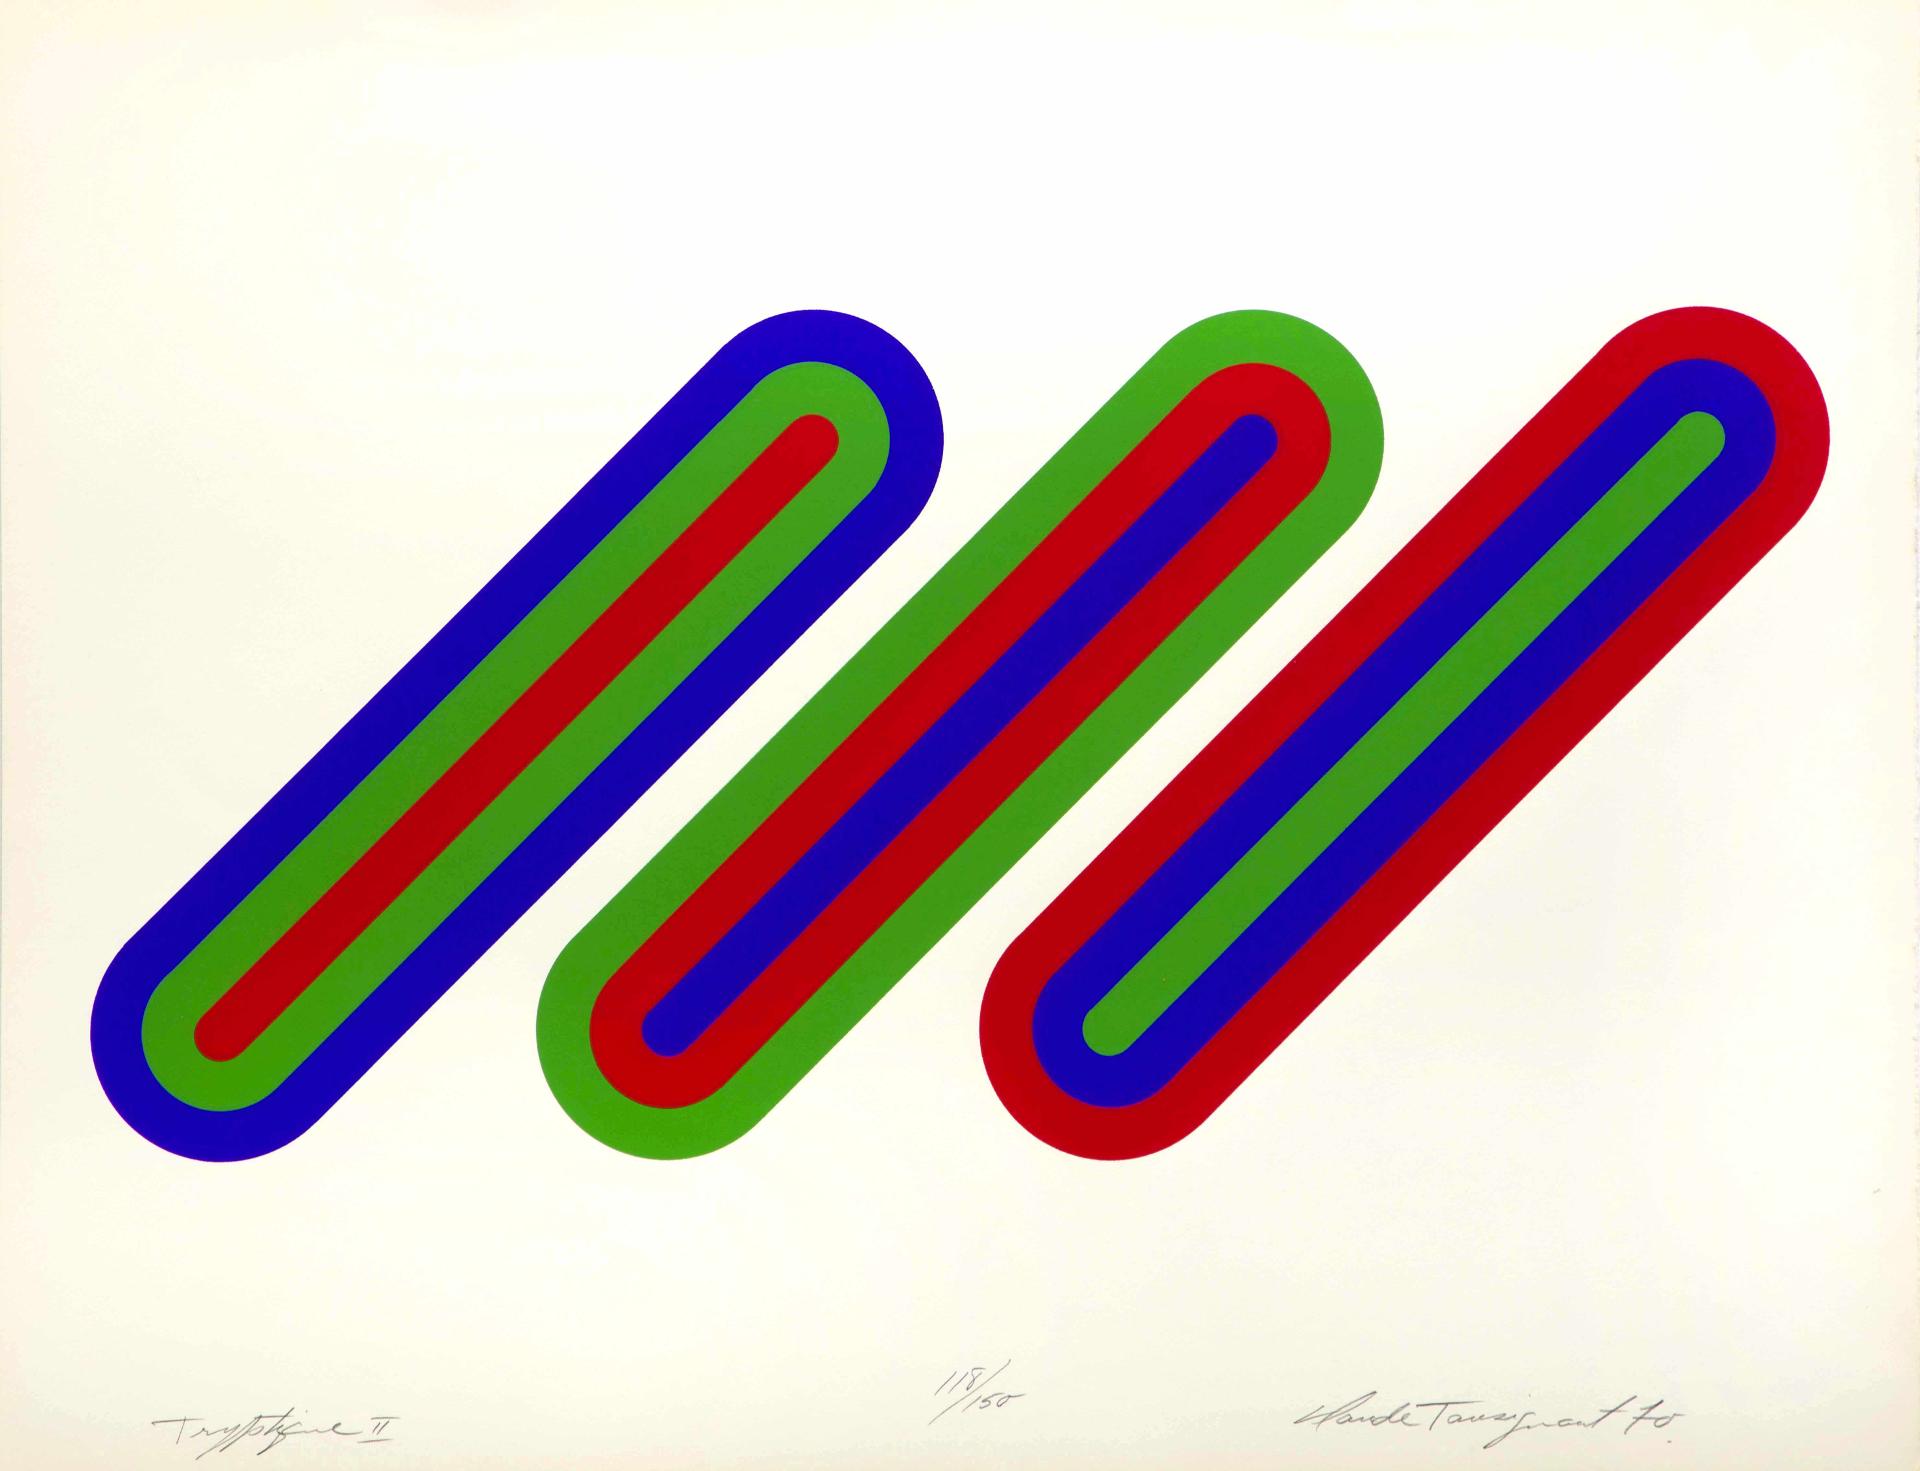 Claude Tousignant (1932) - Triptyque II, 1970